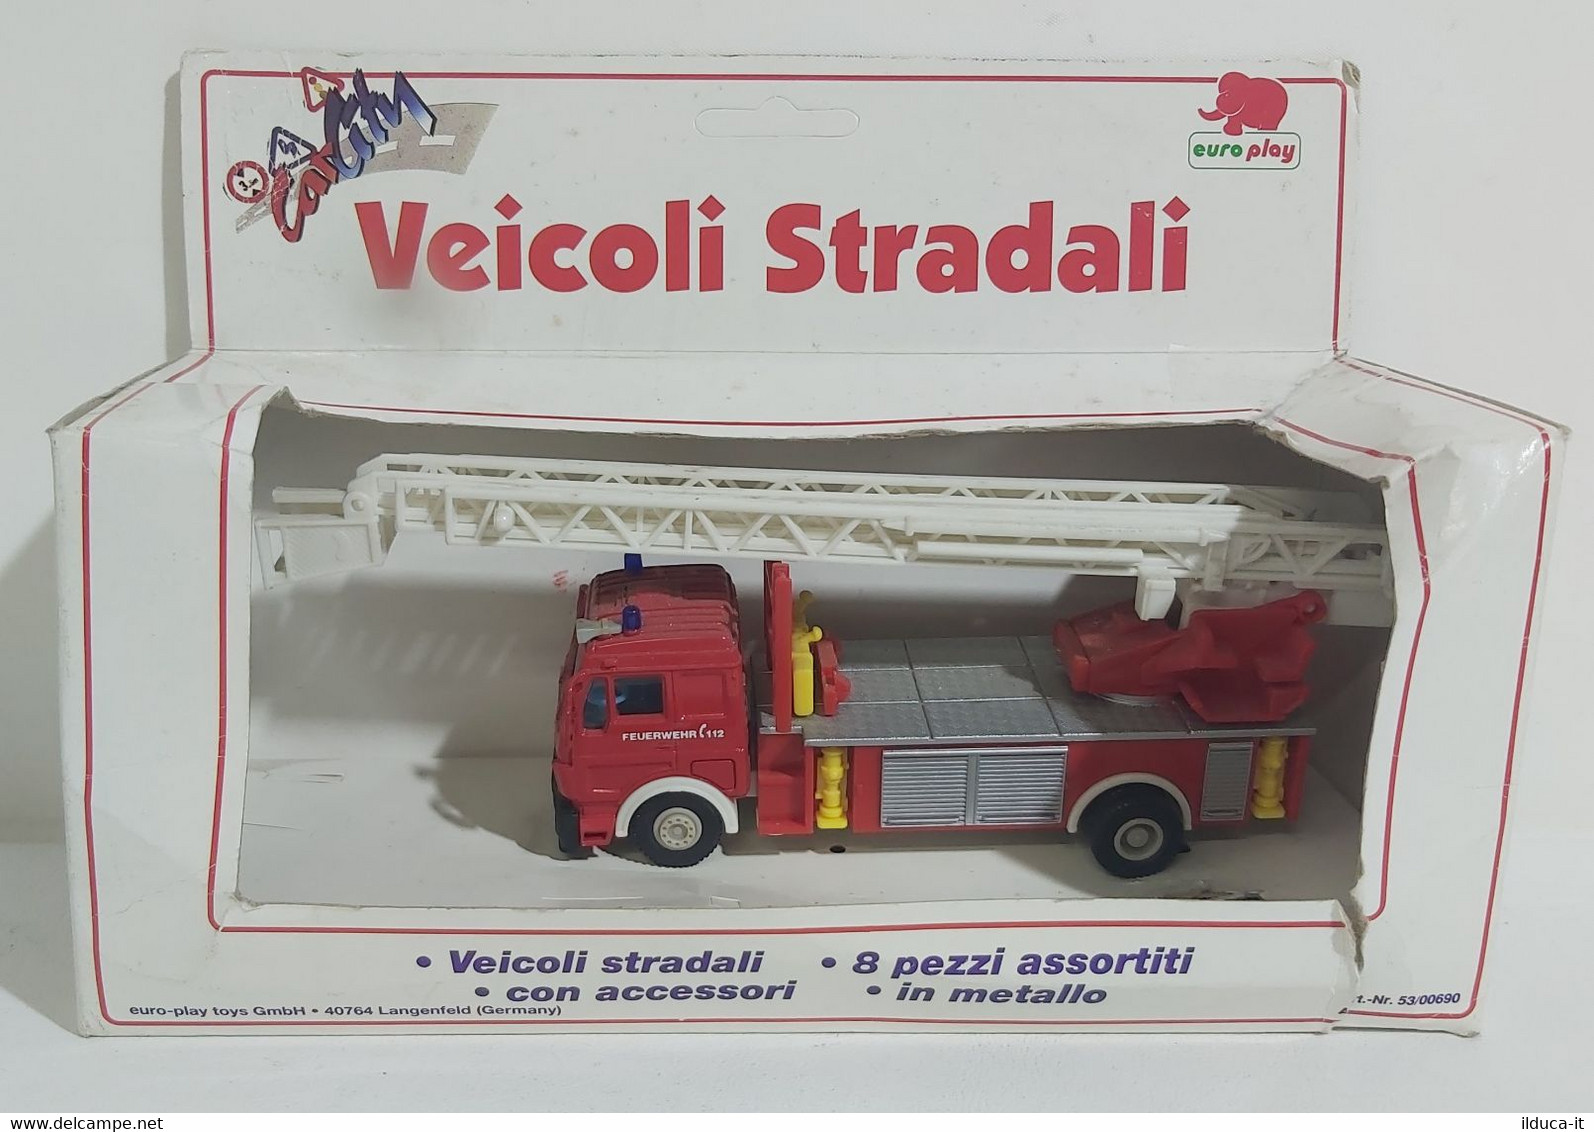 I105756 Europlay 1/72 - Veicoli Stradali - Autoscala - Cod. 53/00690 - Echelle 1:72